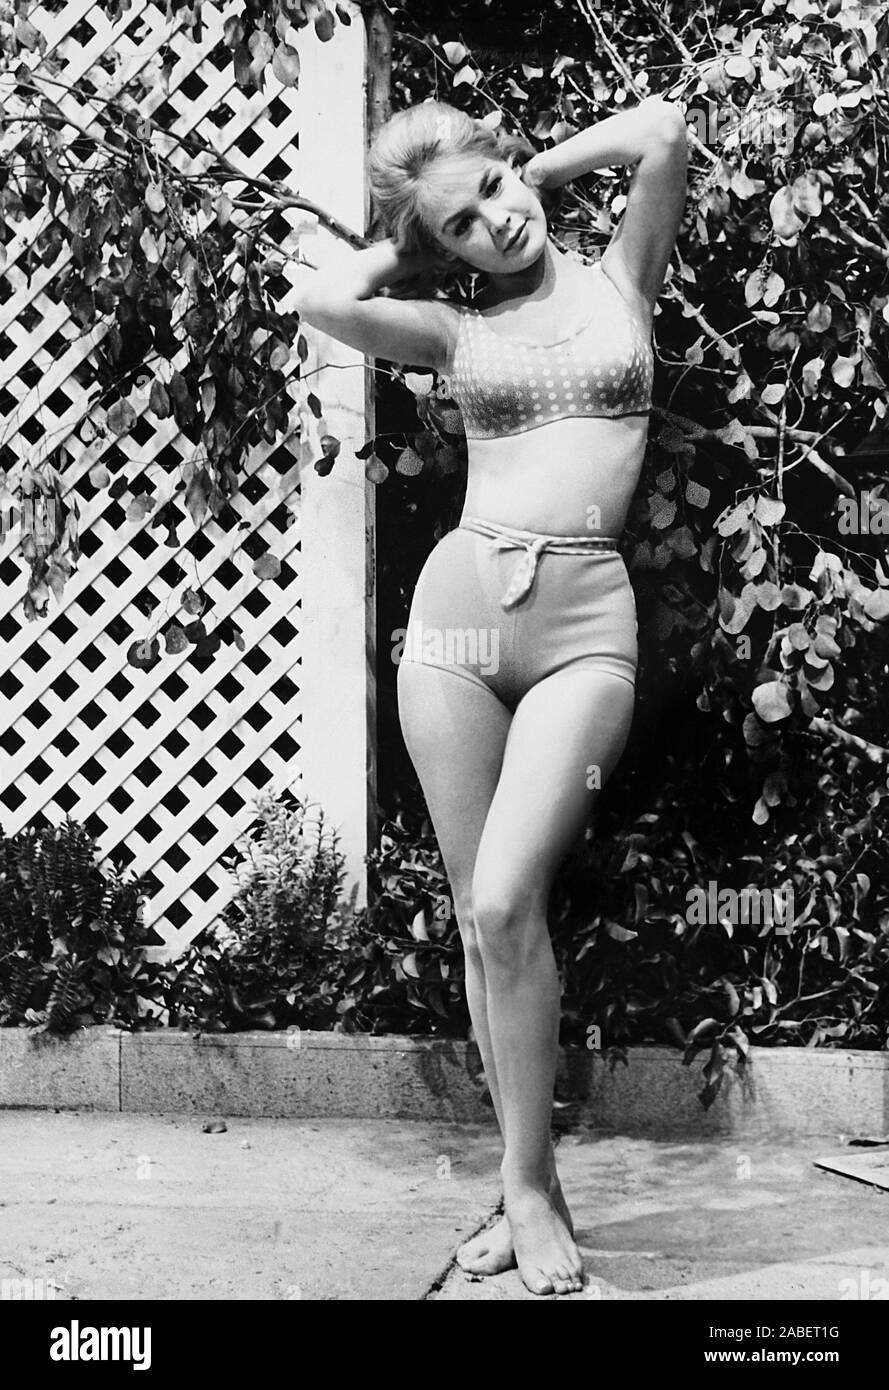 TAKE HER, SHE'S MINE, Sandra Dee on set, 1963, TM & Copyright © 20th Century Fox Film corp./courtesy Everett Collection Stock Photo